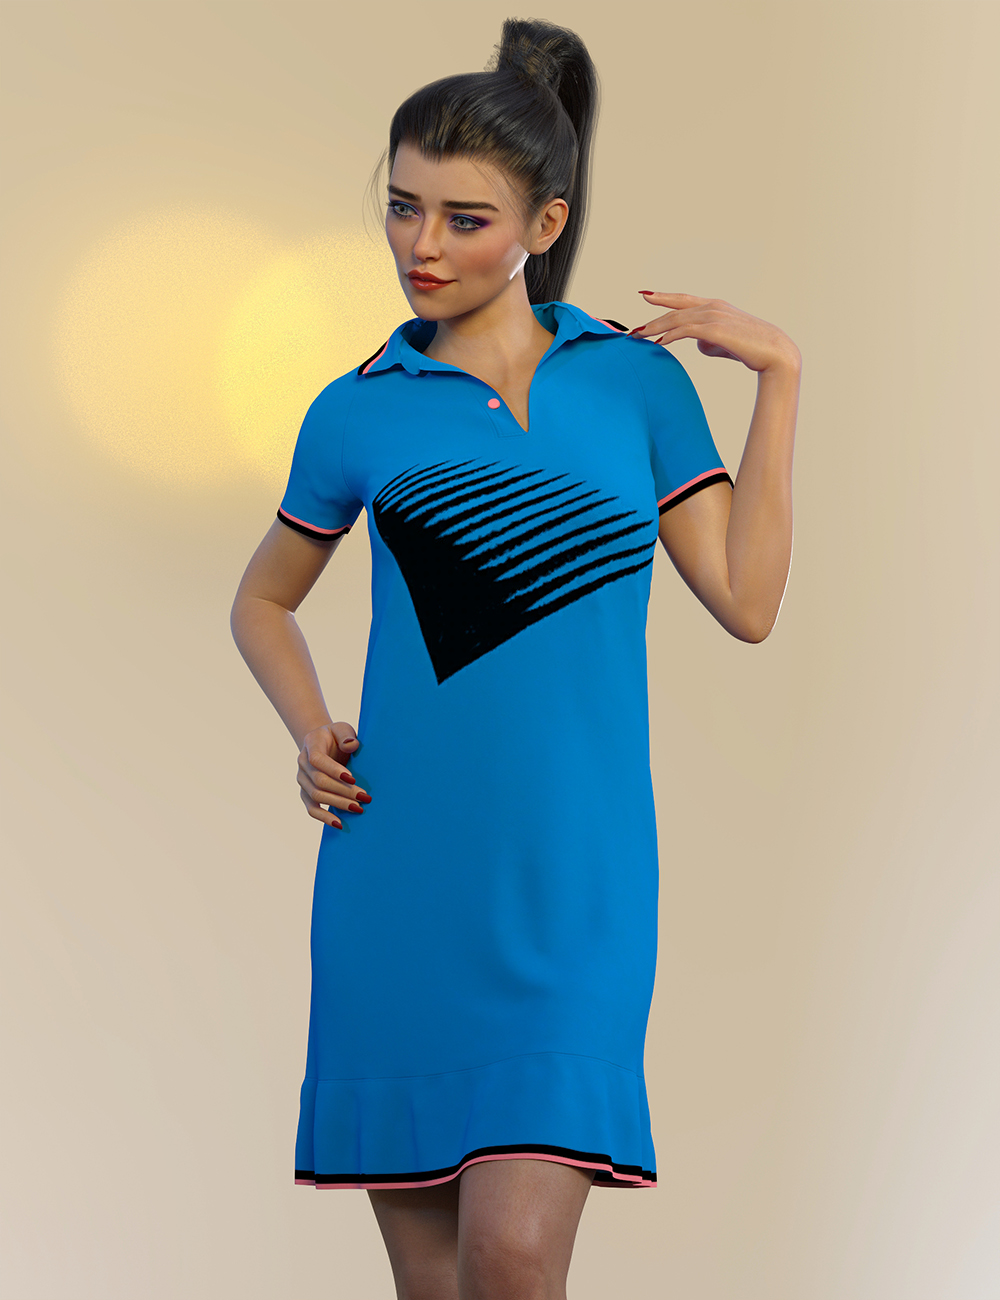 dForce Amanda Tennis Dress for Genesis 8 and 8.1 Females by: Nelmi, 3D Models by Daz 3D